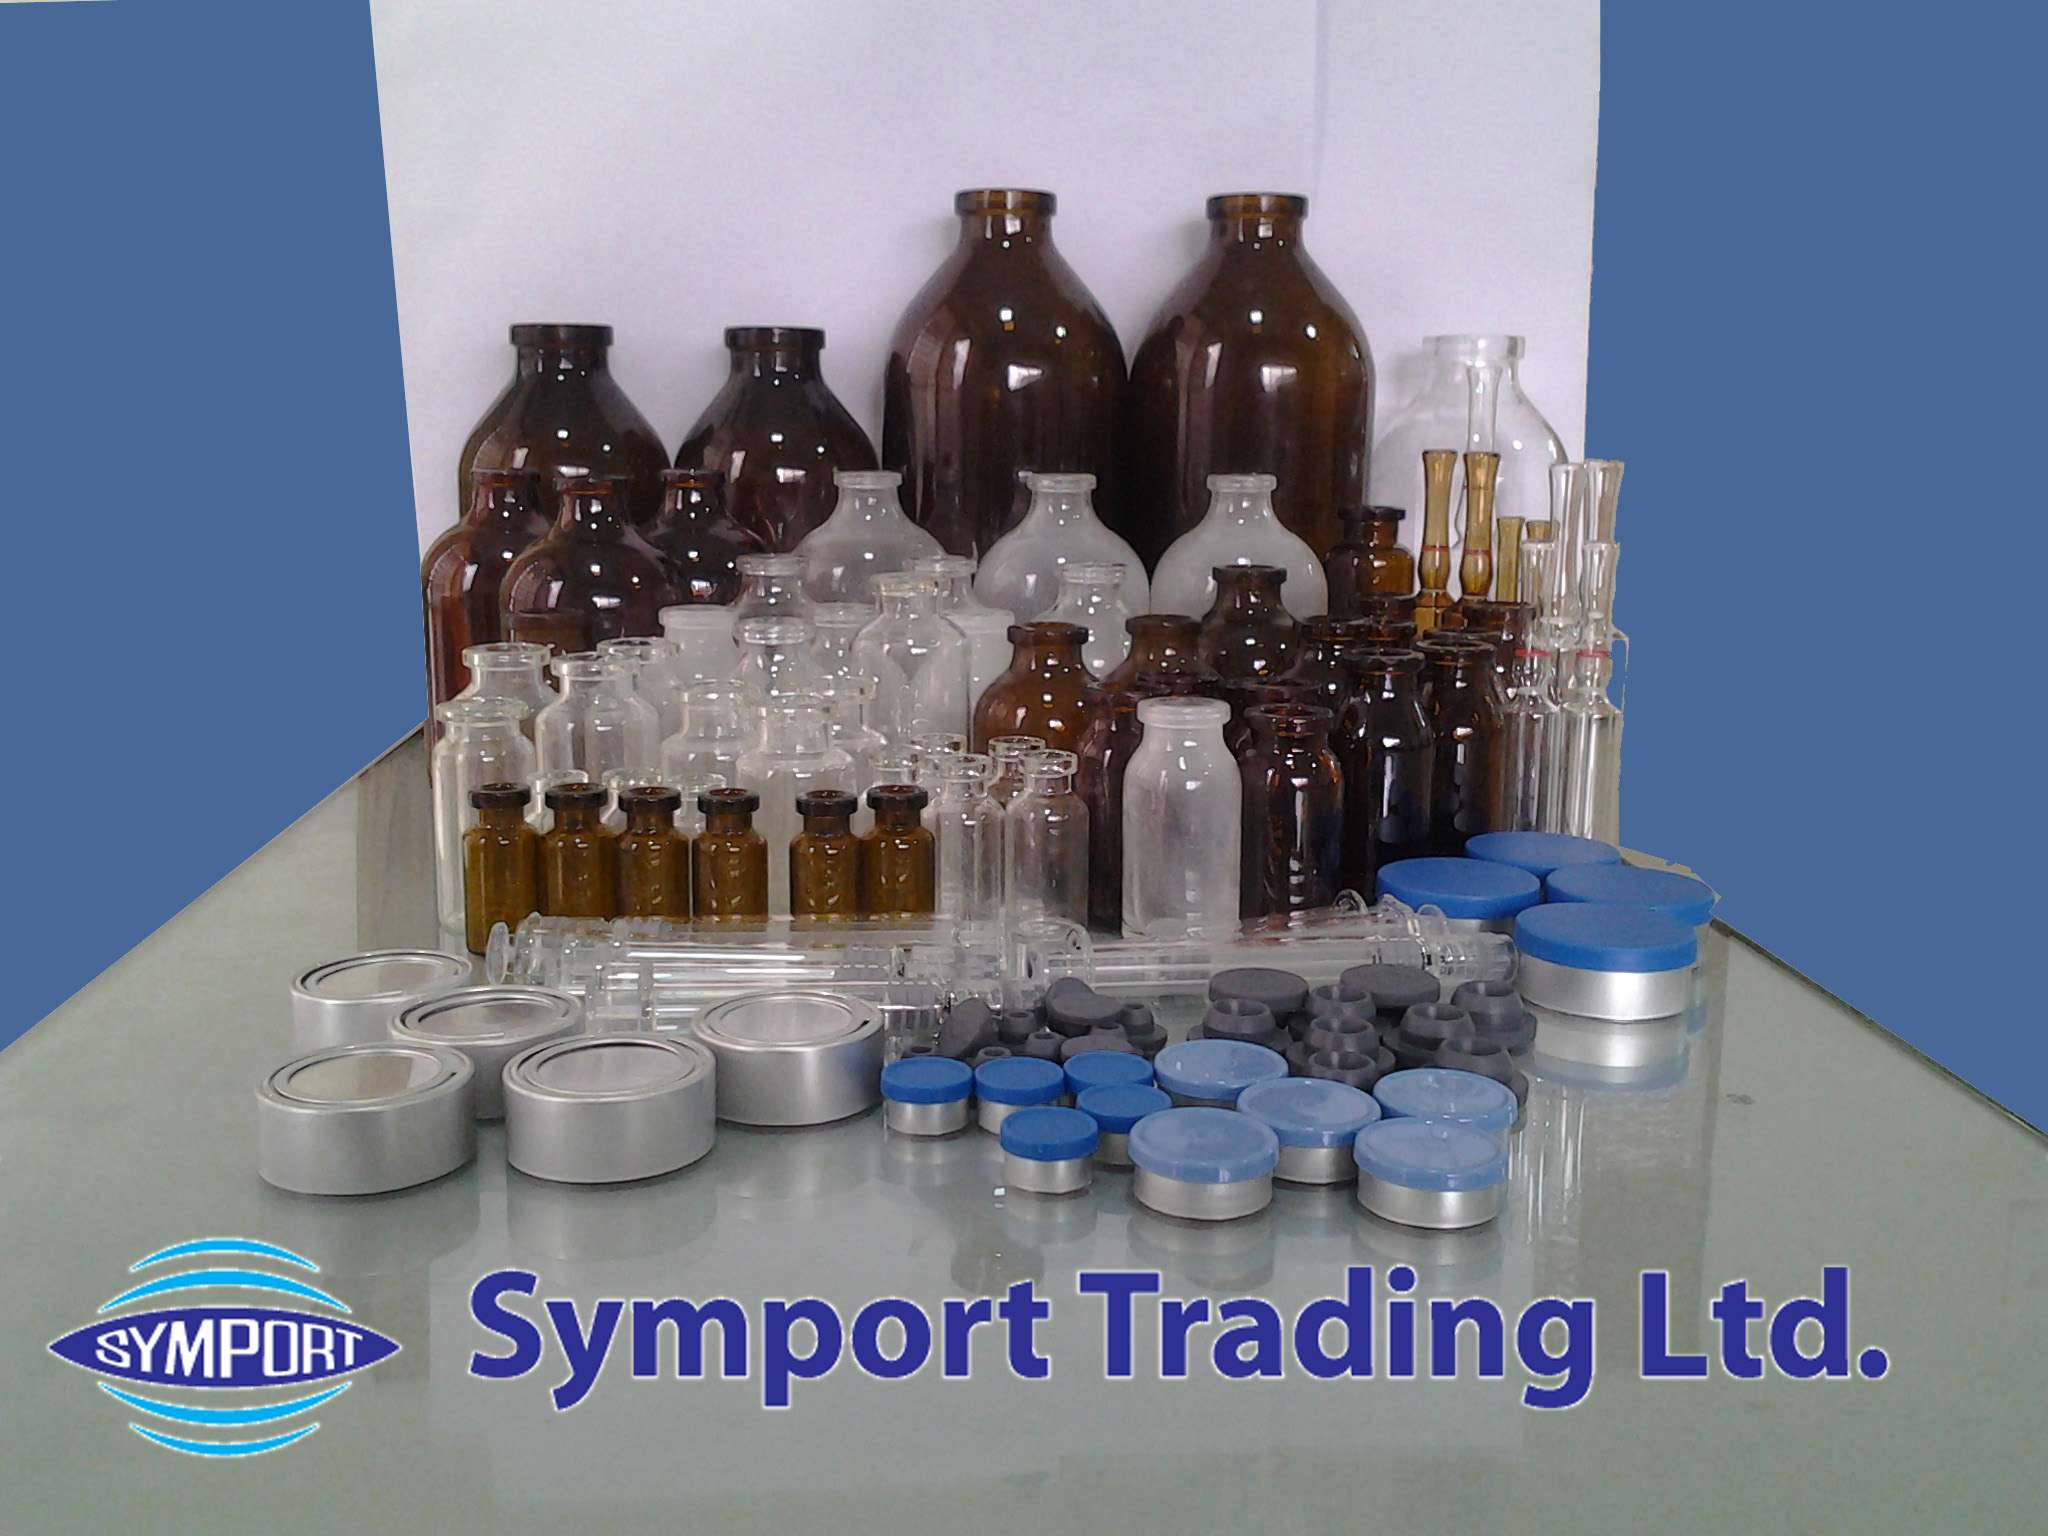 Symport Trading Ltd.